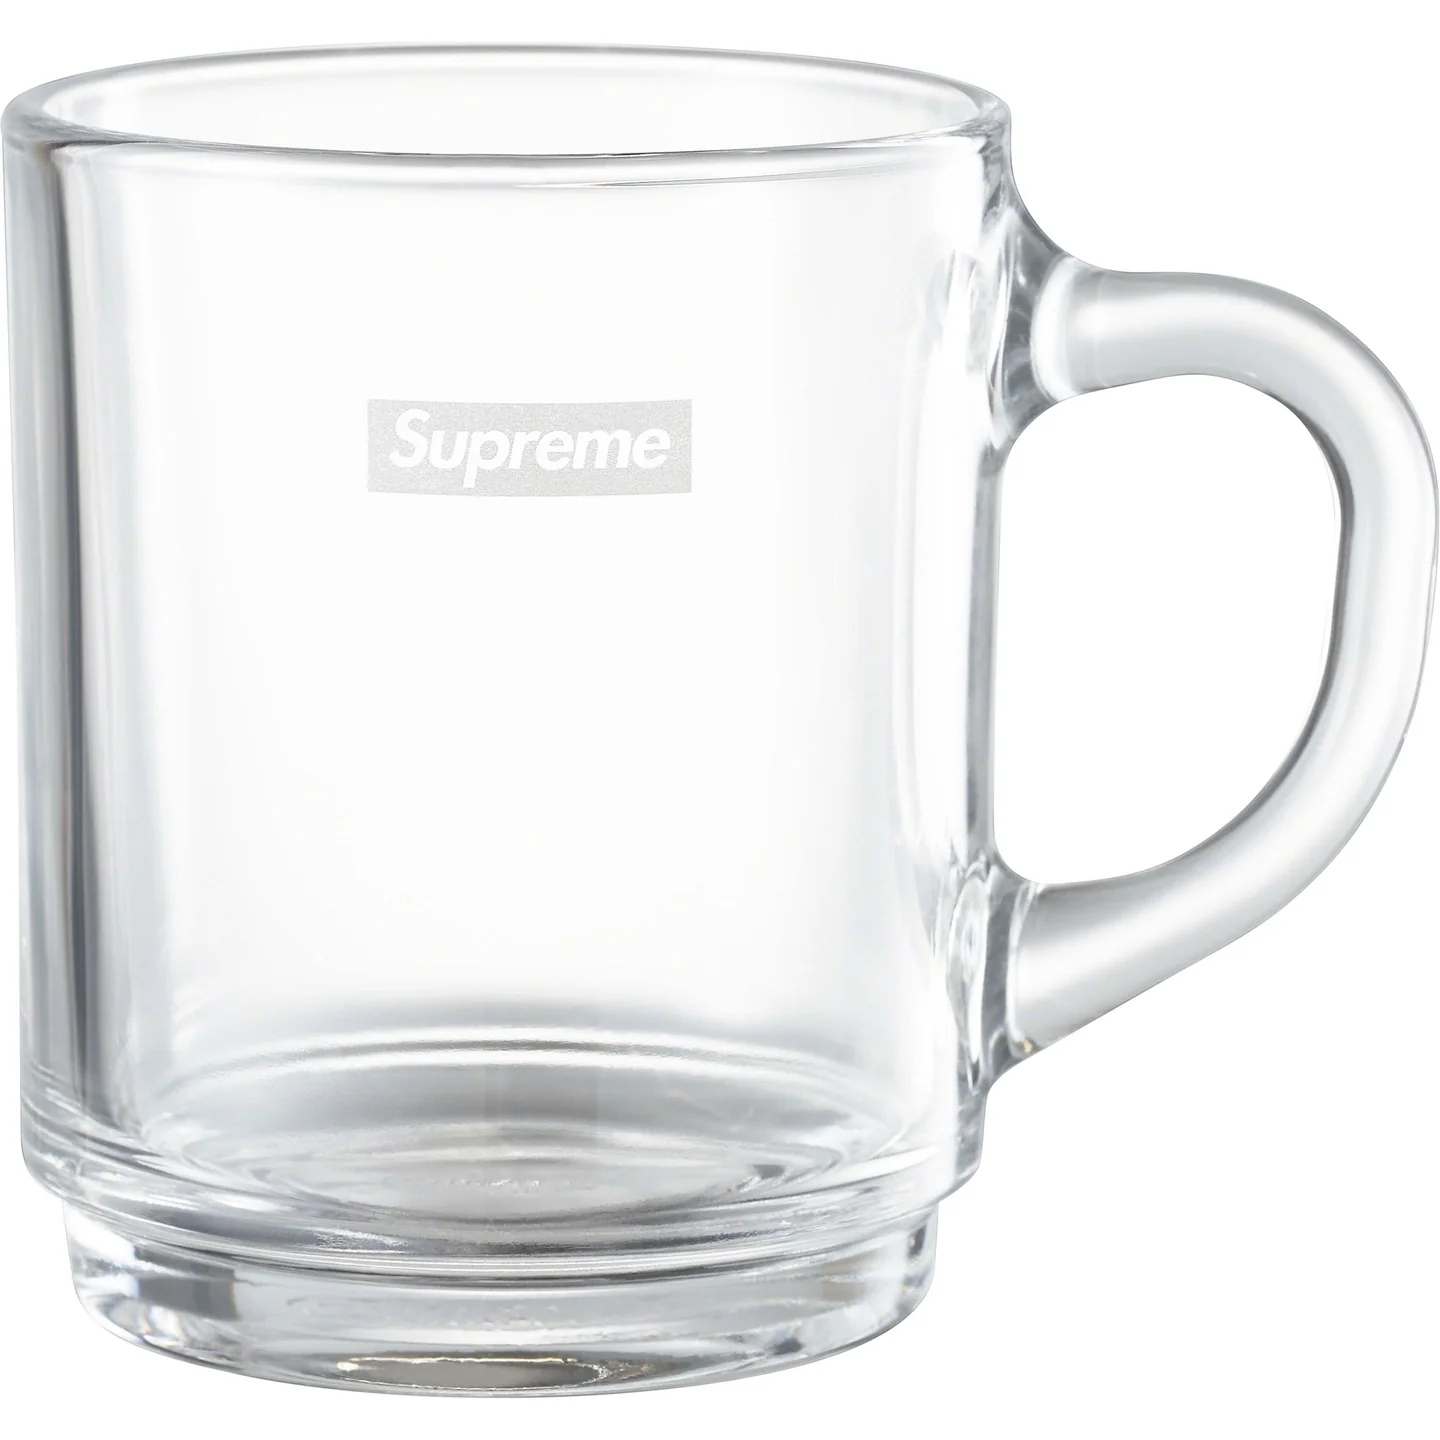 Supreme®/Duralex Glass Mugs (Set of 6)